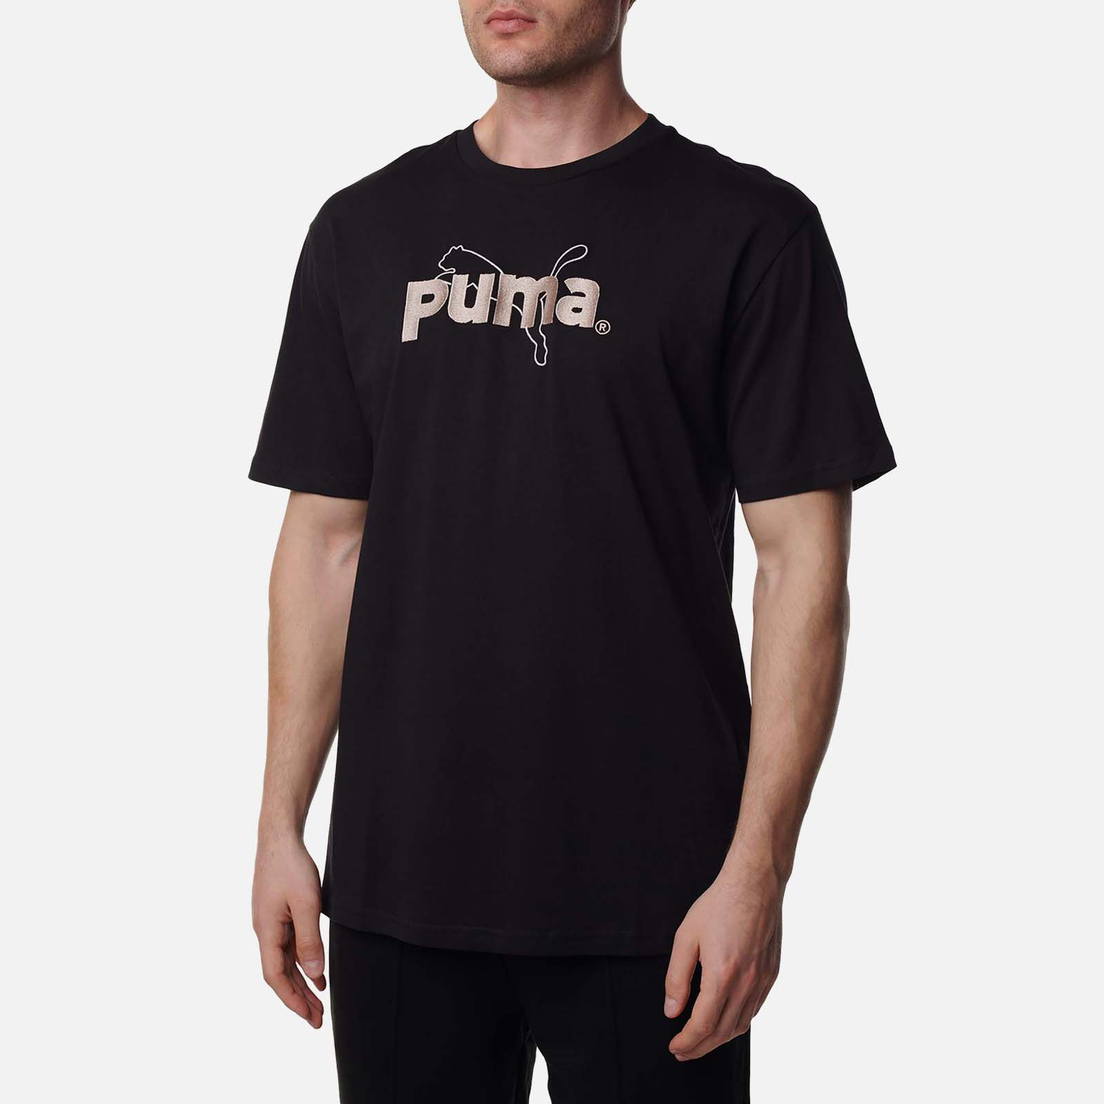 Puma Мужская футболка Puma Team Graphic